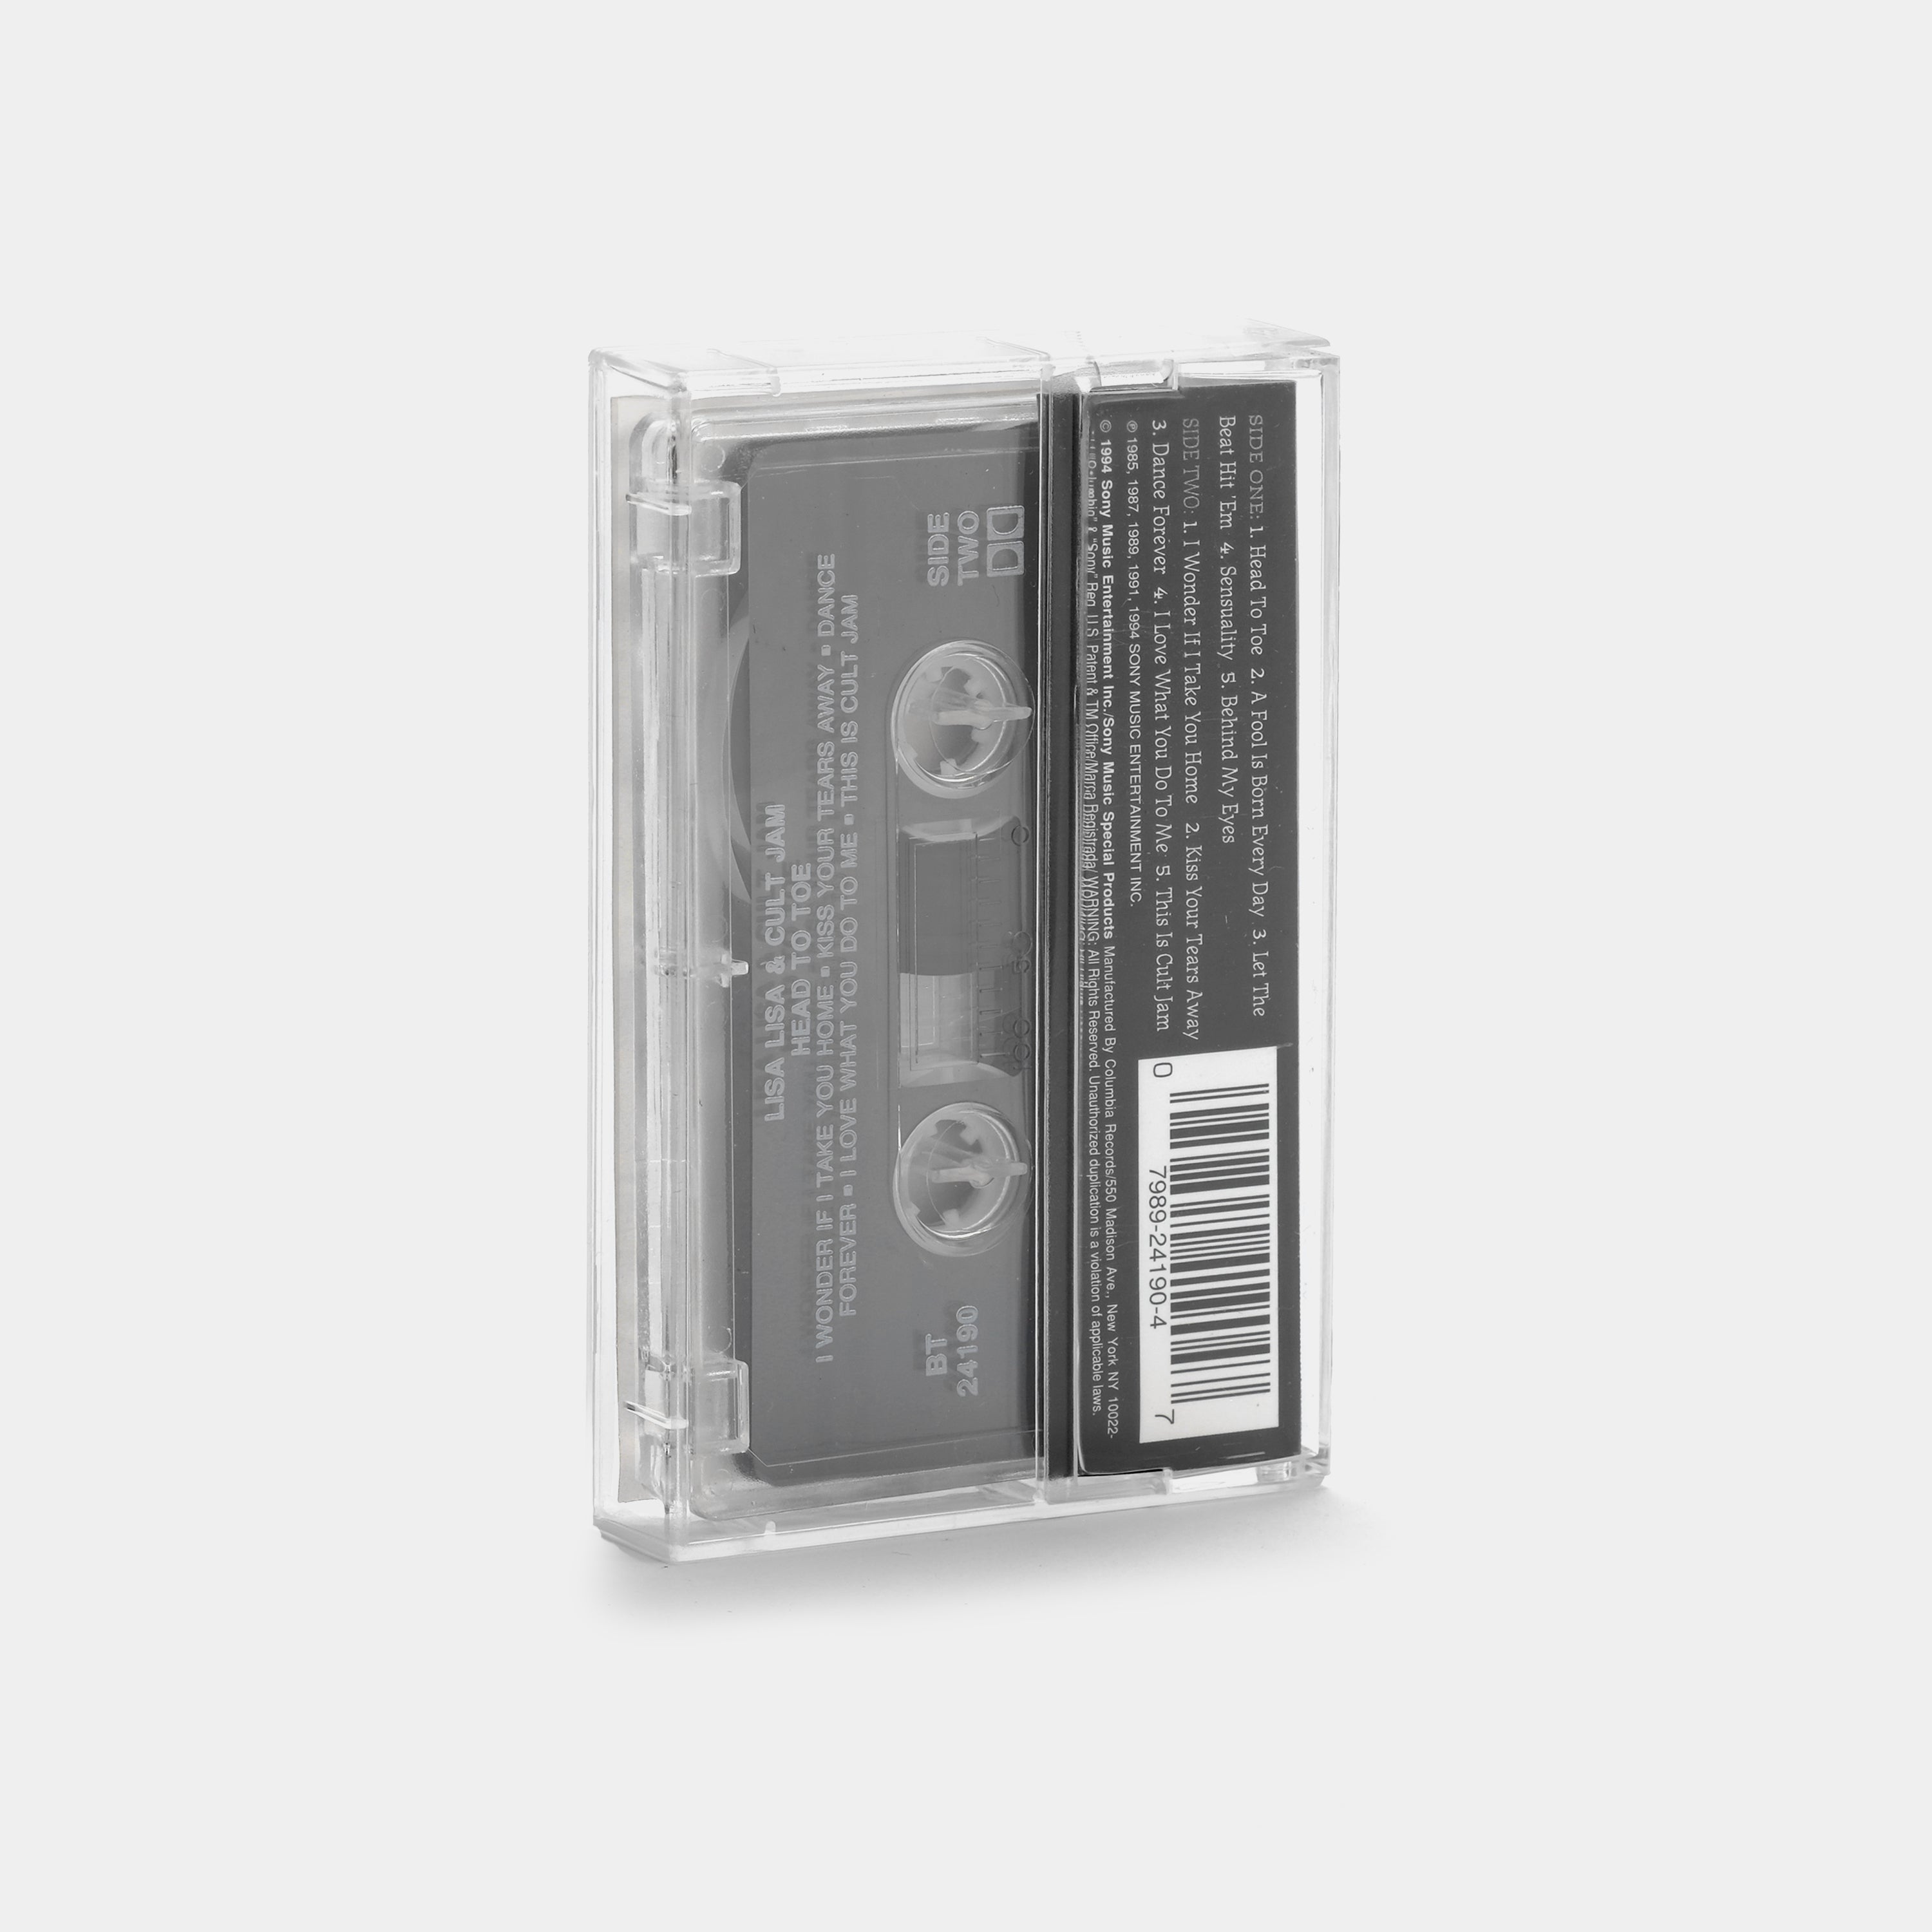 Lisa Lisa & Cult Jam - Head To Toe Cassette Tape